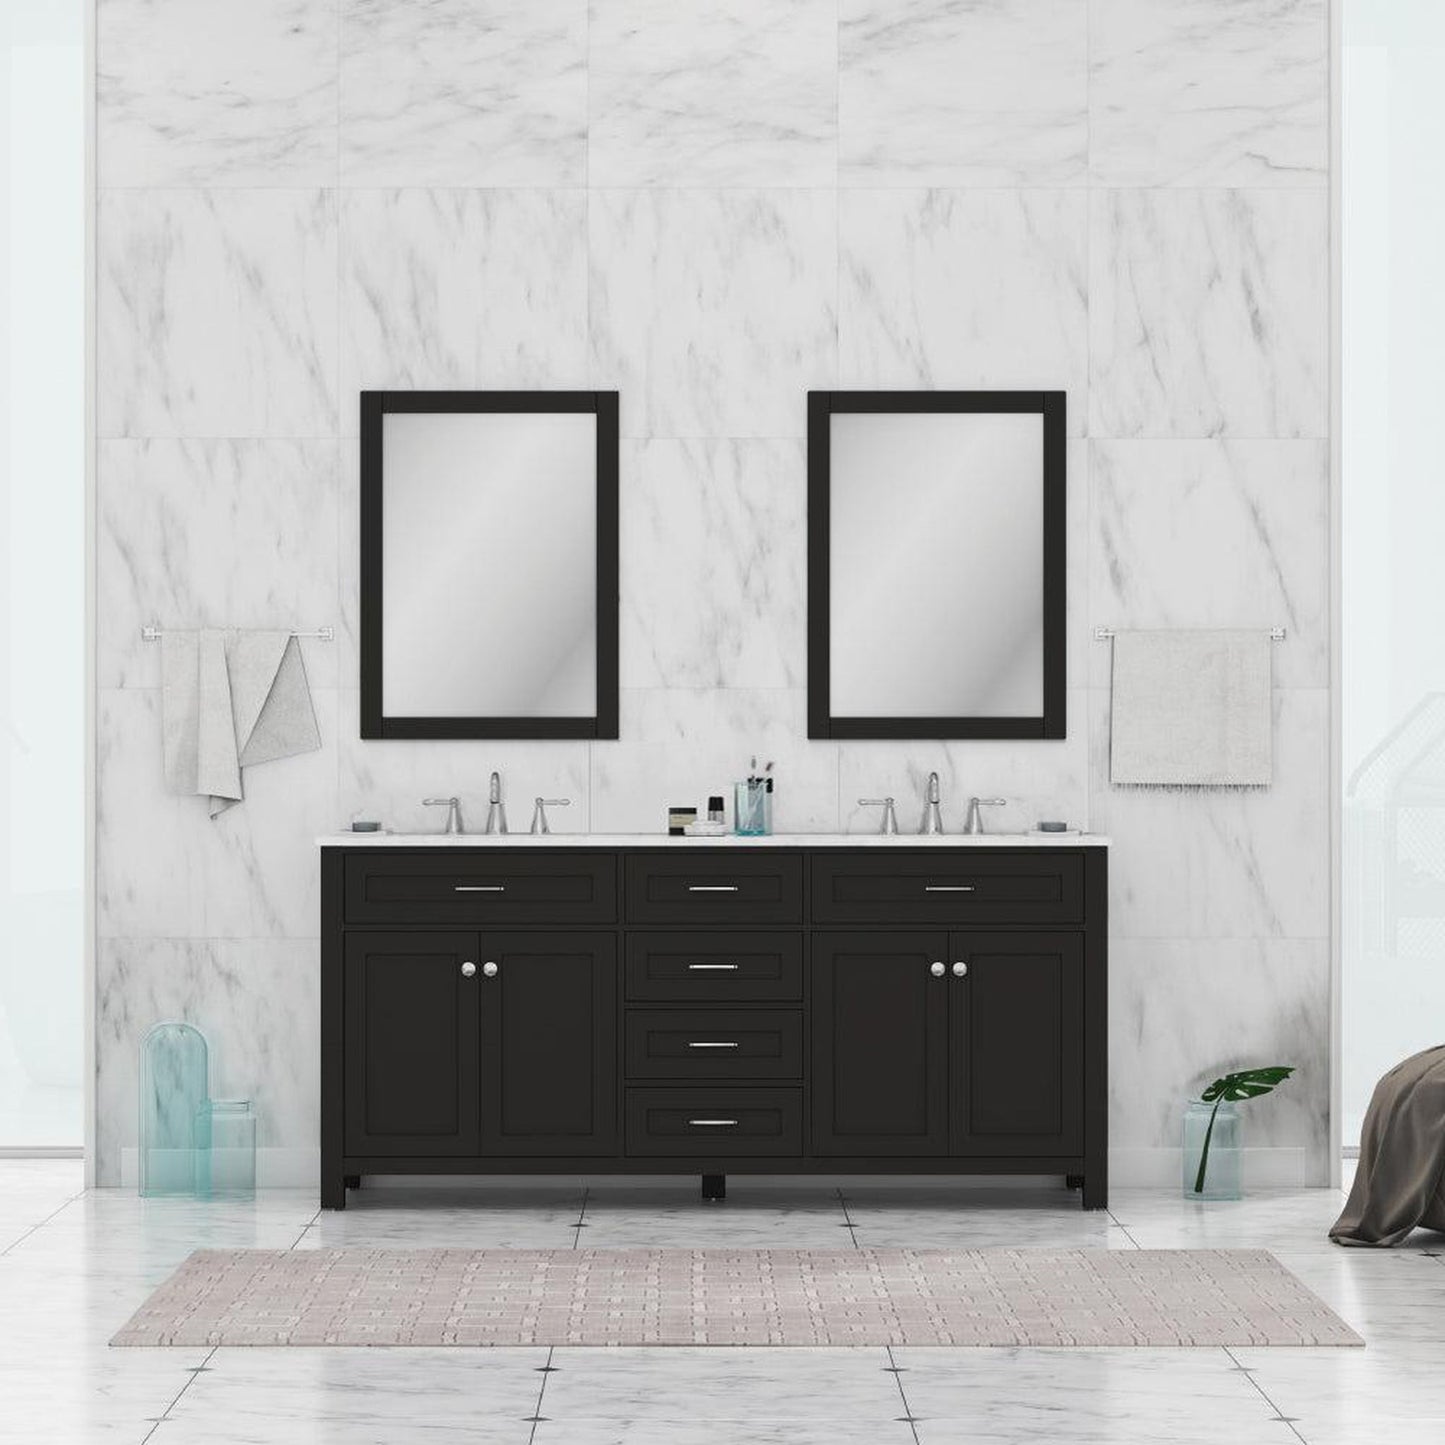 Alya Bath Norwalk 72" Double Espresso Freestanding Bathroom Vanity With Carrara Marble Top, Ceramic Sink and Two Mirrors